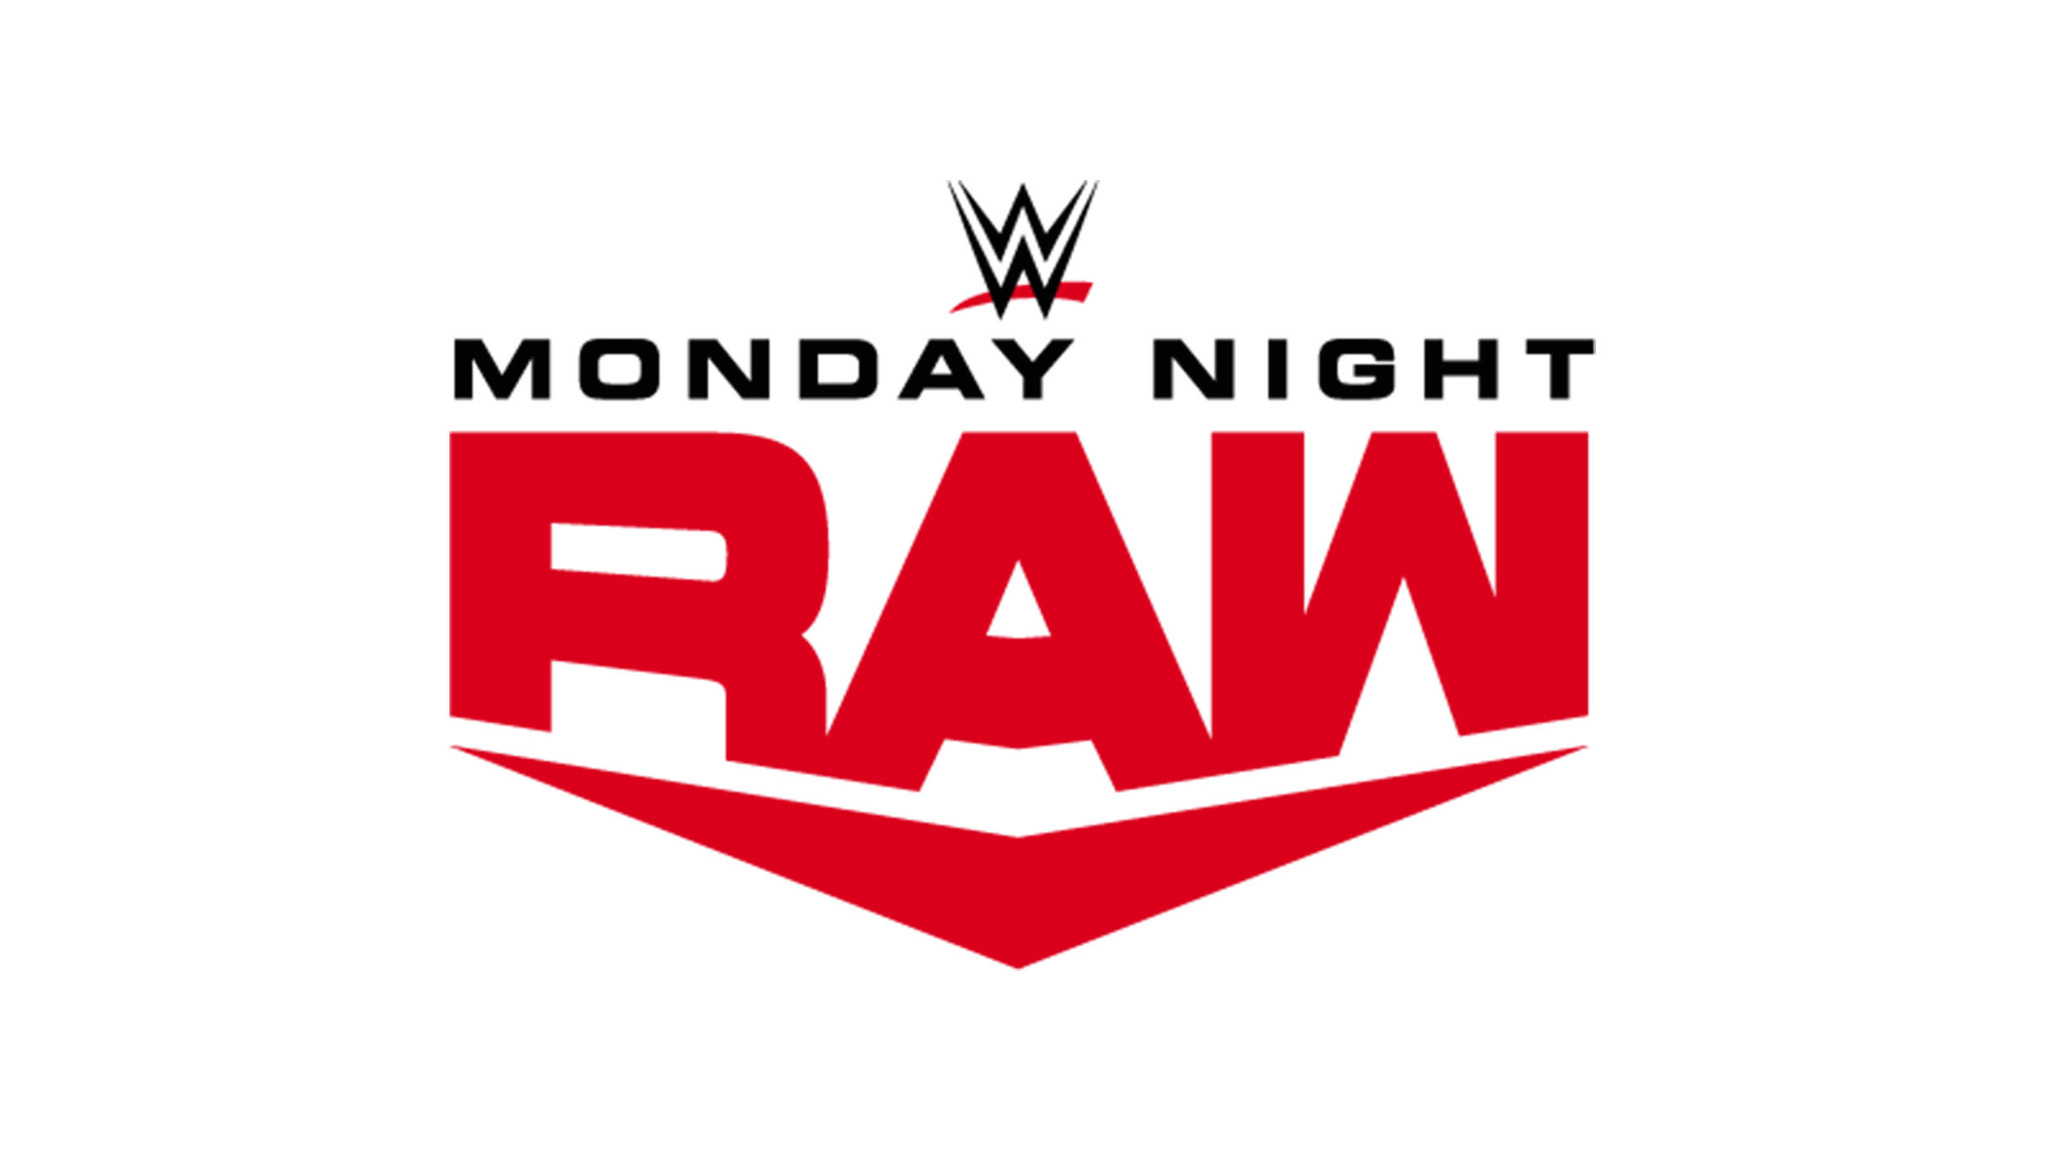 WWE Monday Night RAW Tickets | Single Game Tickets & Schedule